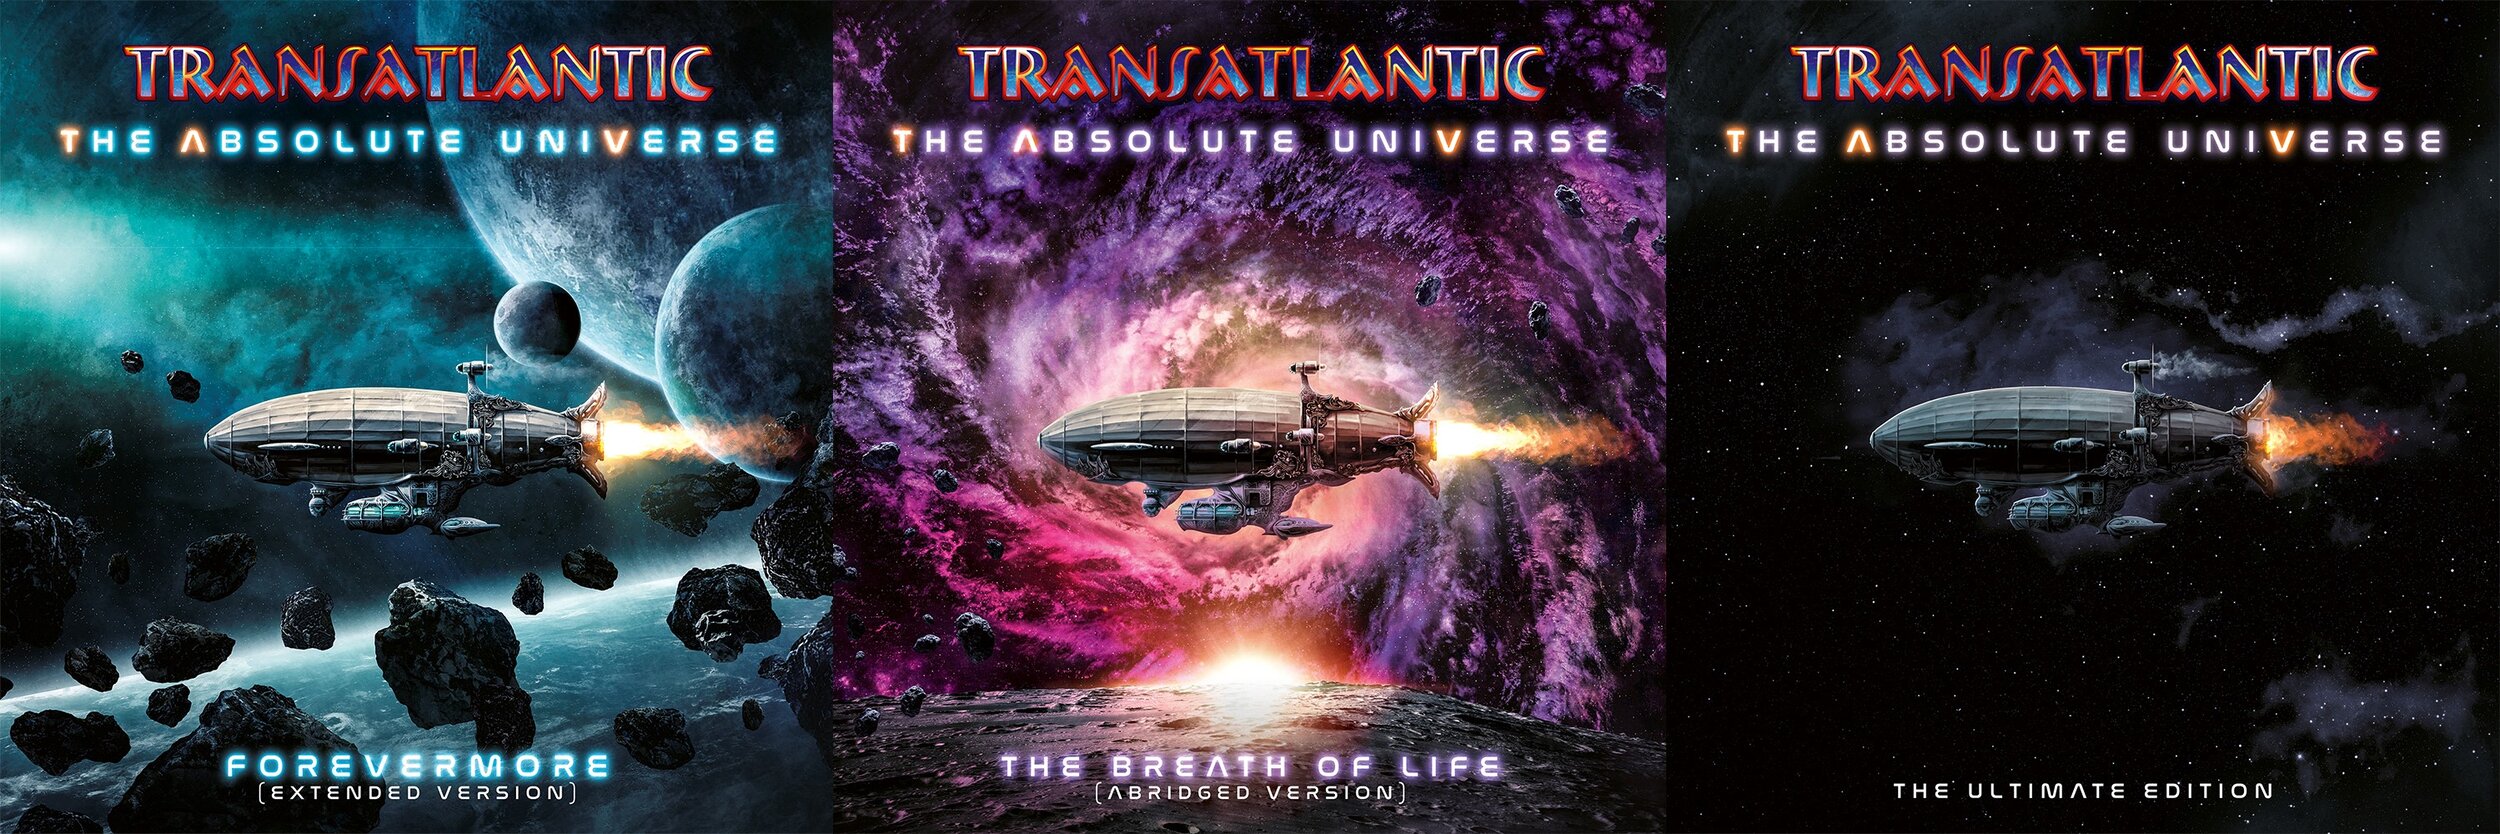 Transatlantic to release The Absolute Universe album 05/02/2021